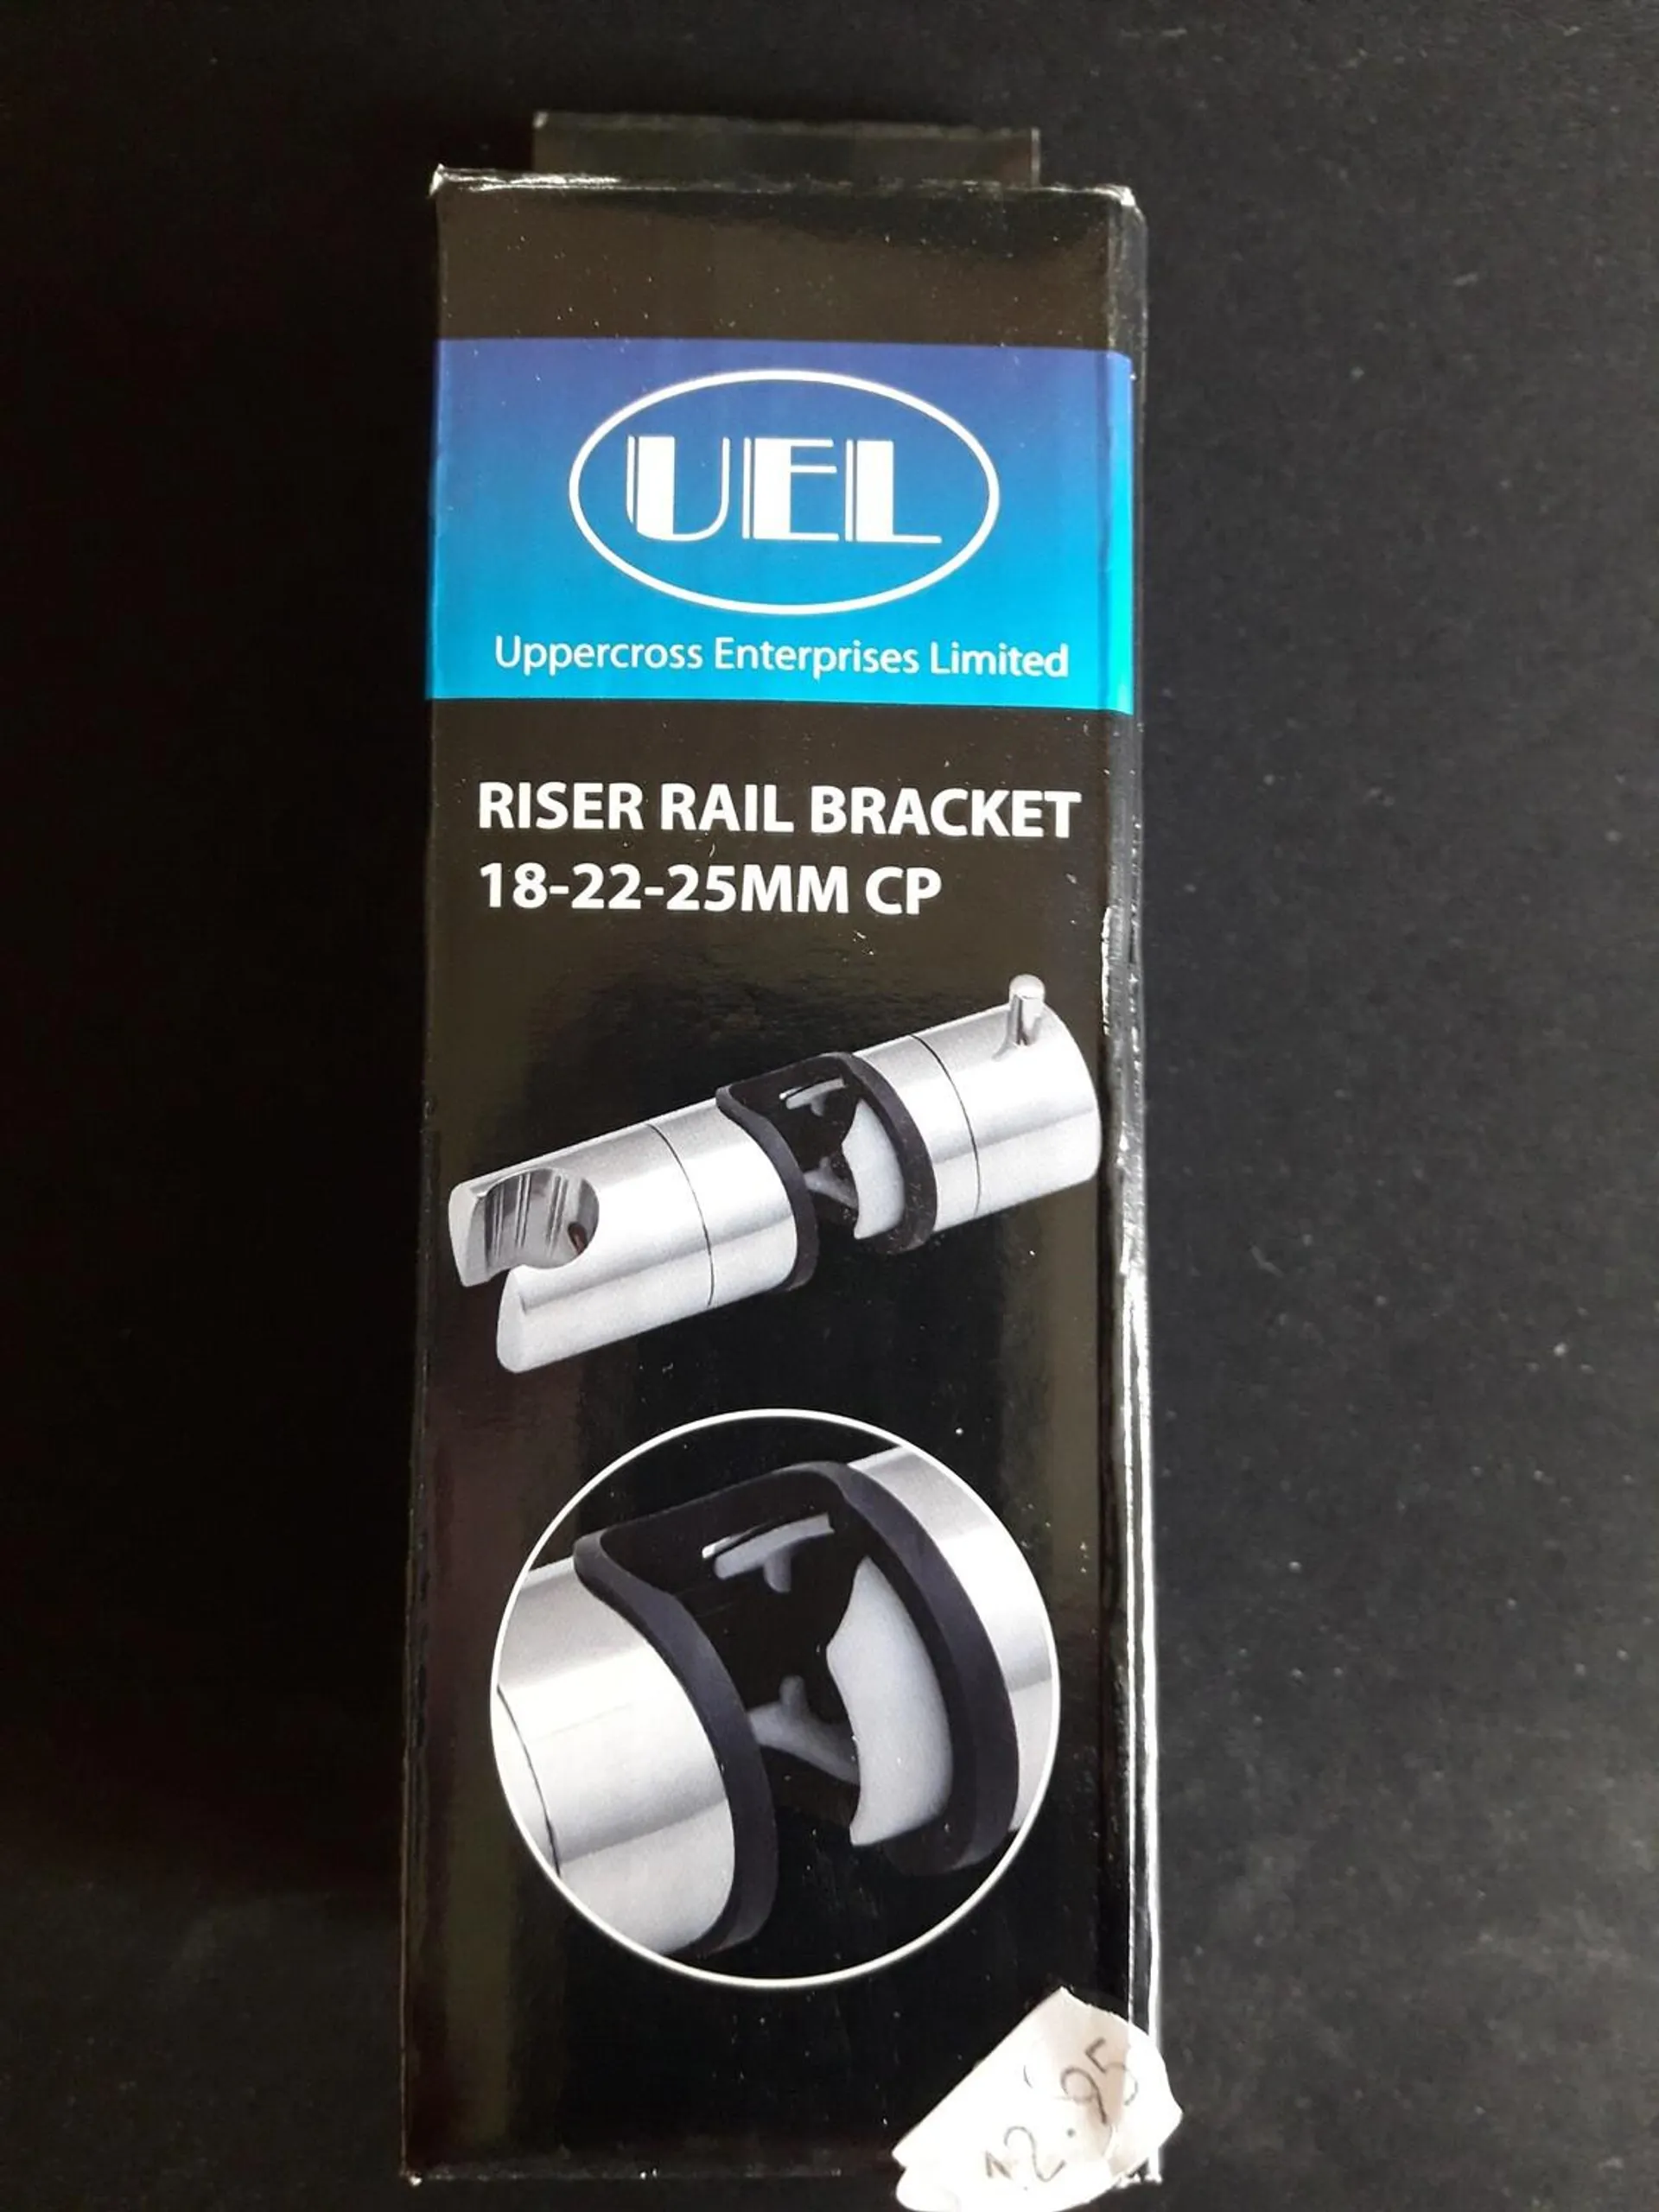 UEL Riser Rail Bracket